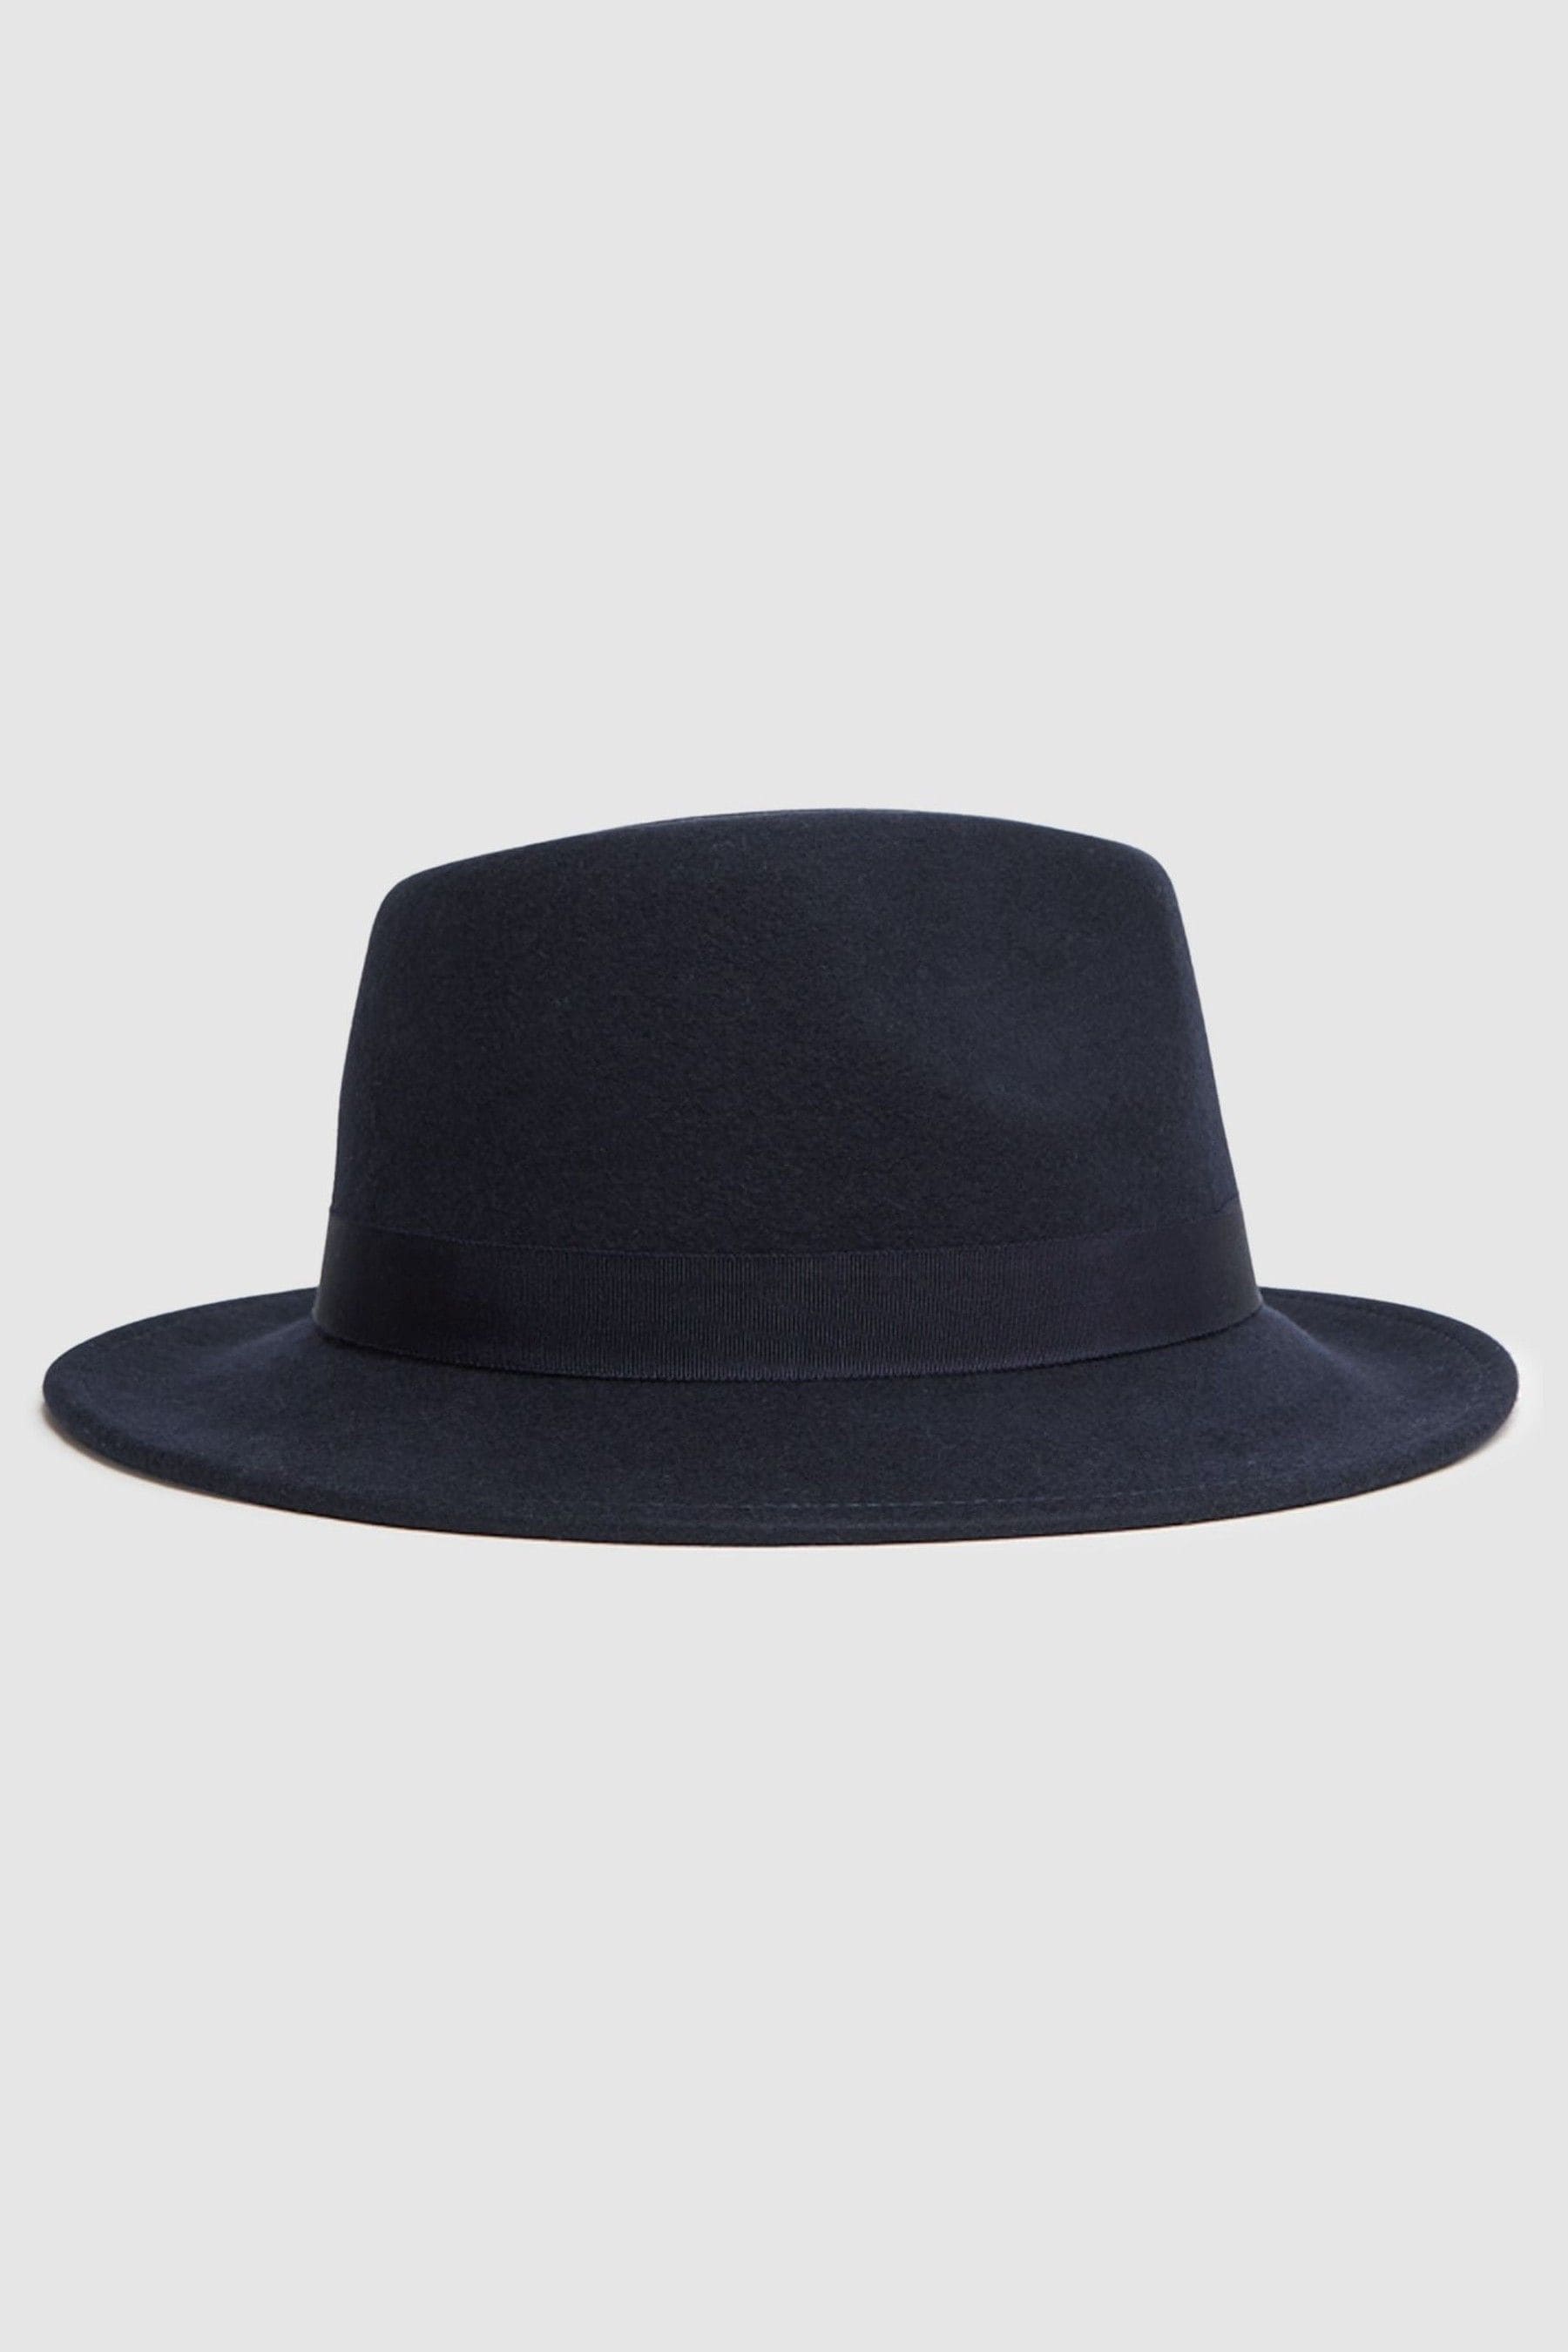 Ally - Navy Wool Fedora Hat